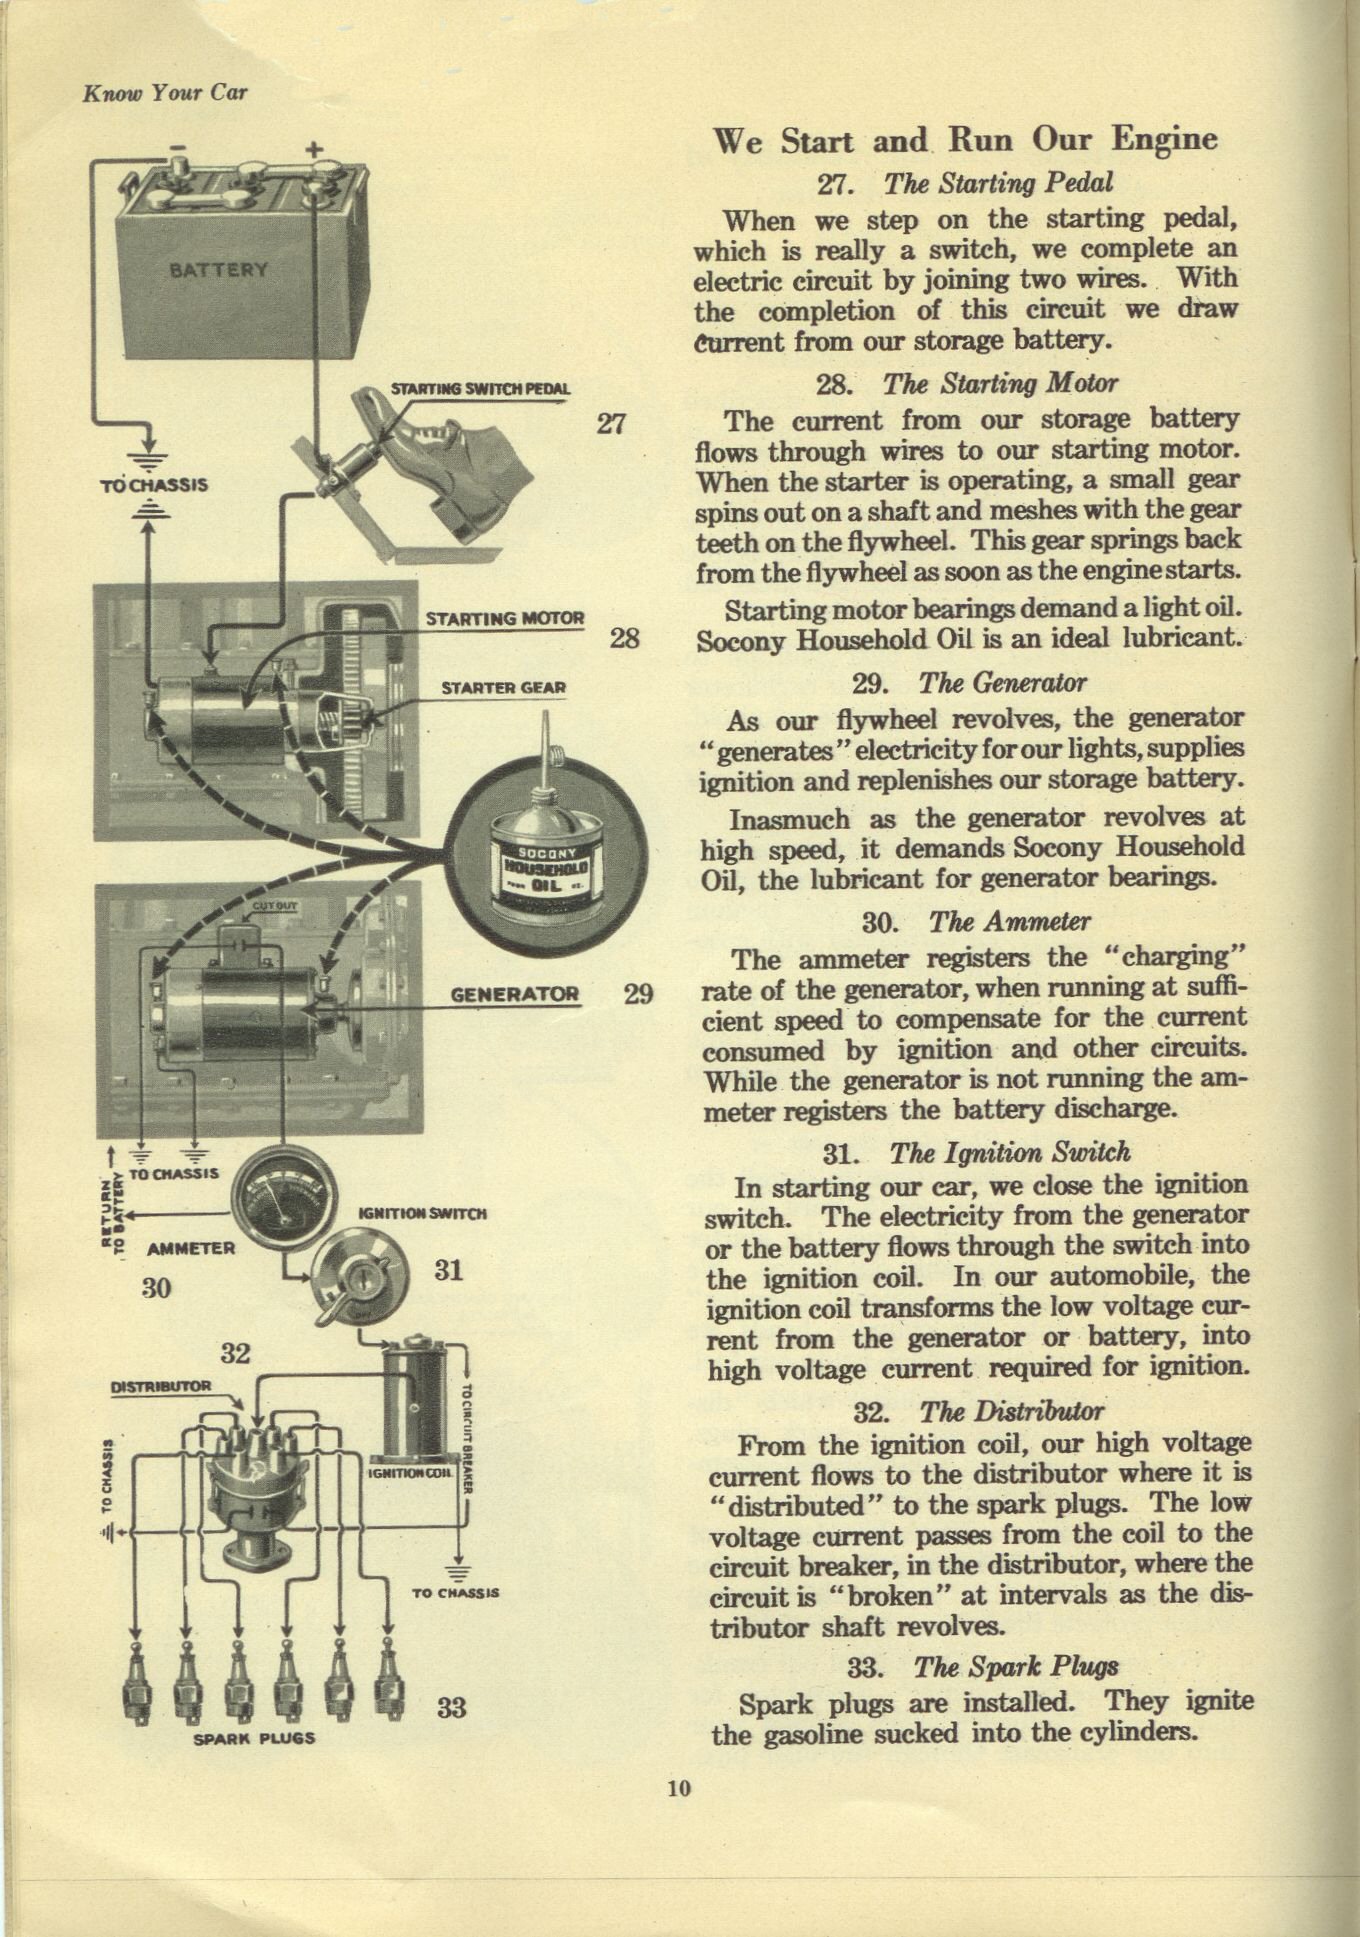 1928 Know Your Car Handbook Page 12